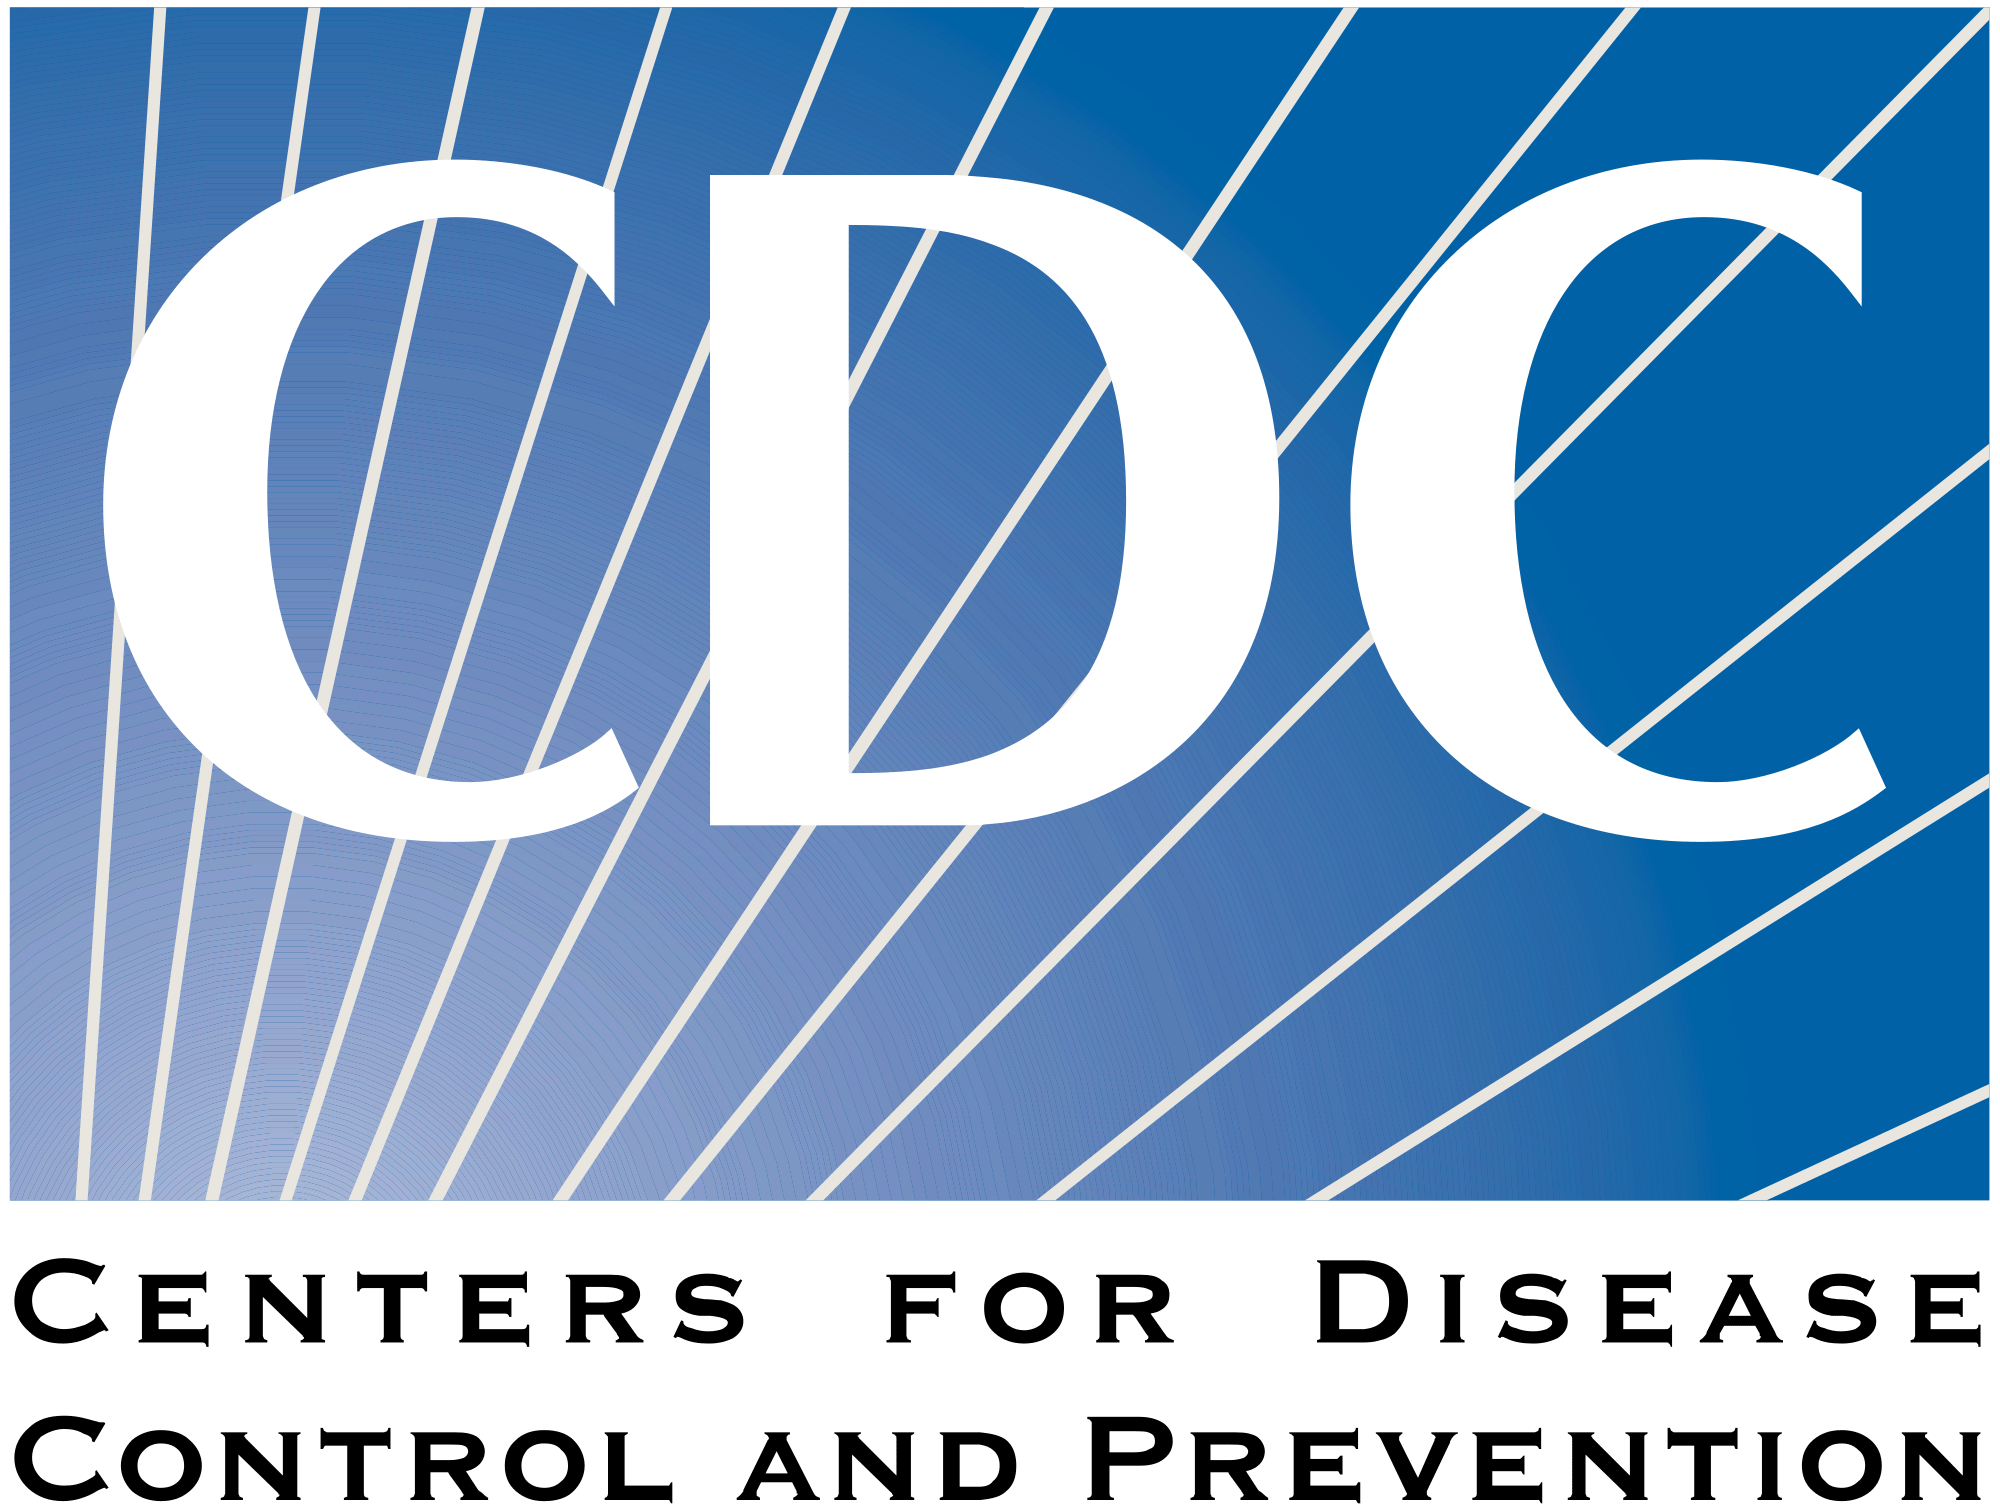 CDC Logo 